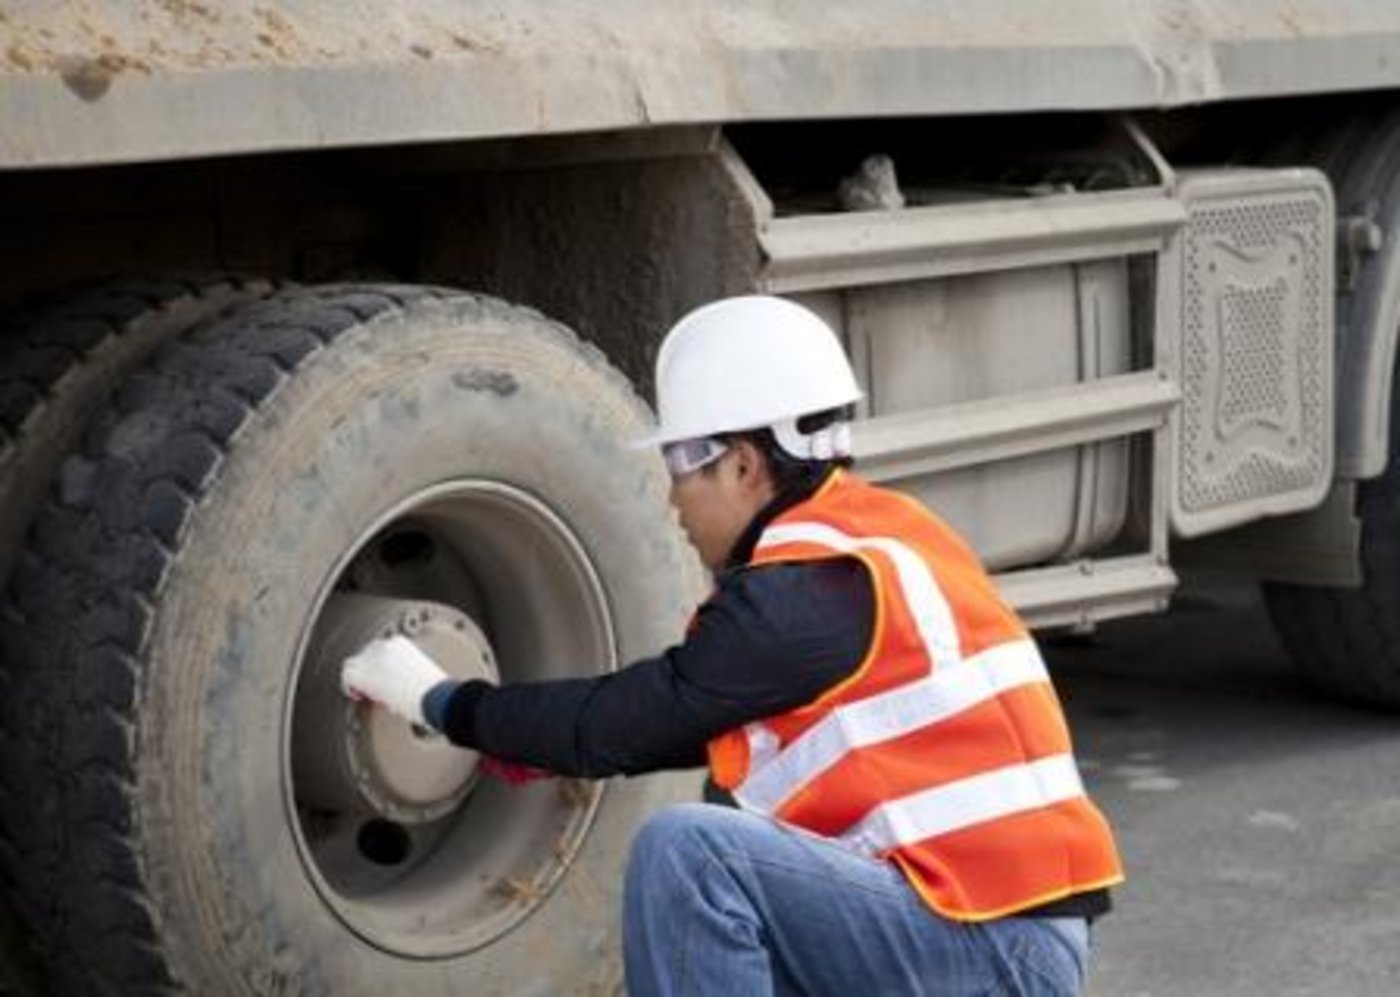 Technical Roadside Inspection (Regulation)